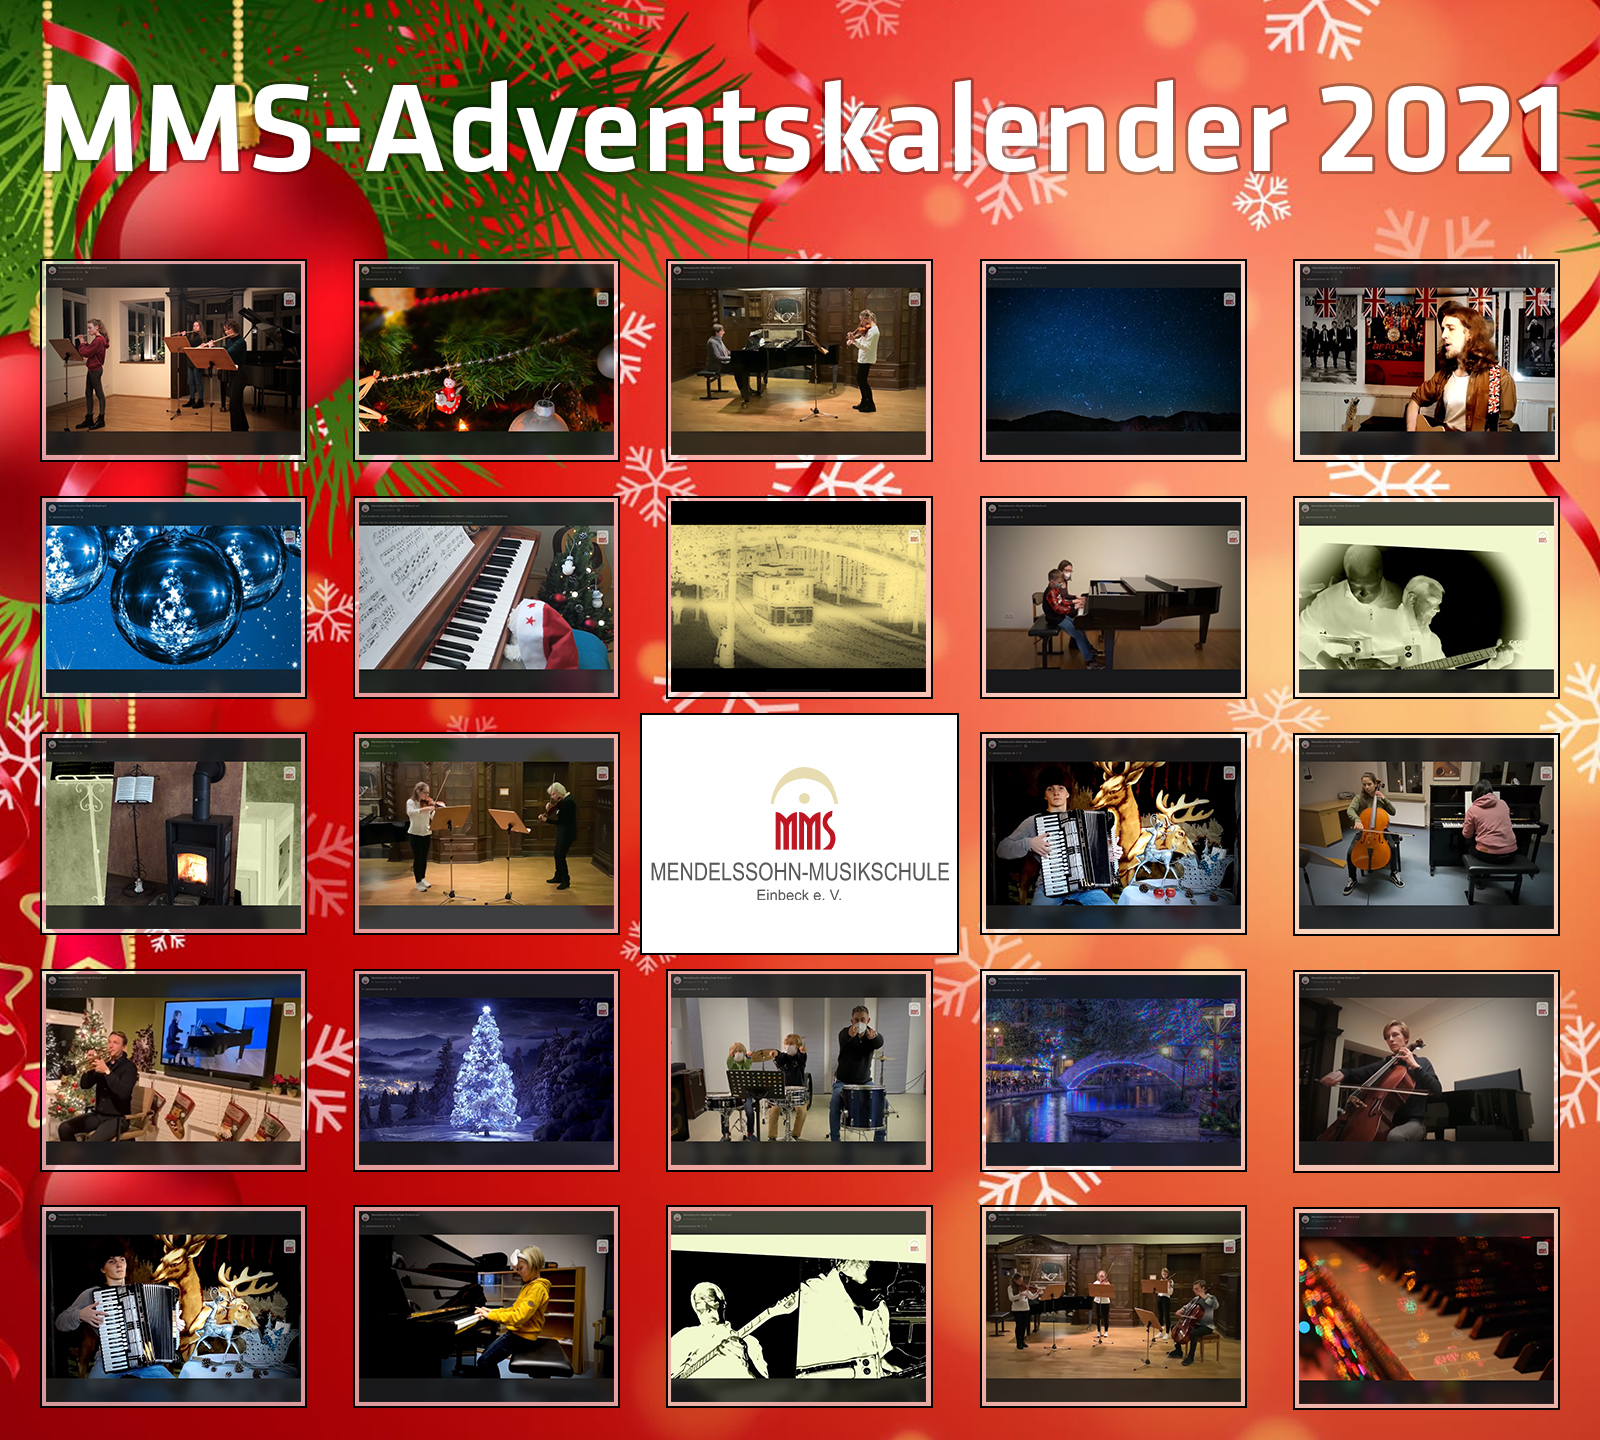 MMS-Adventskalender 2021